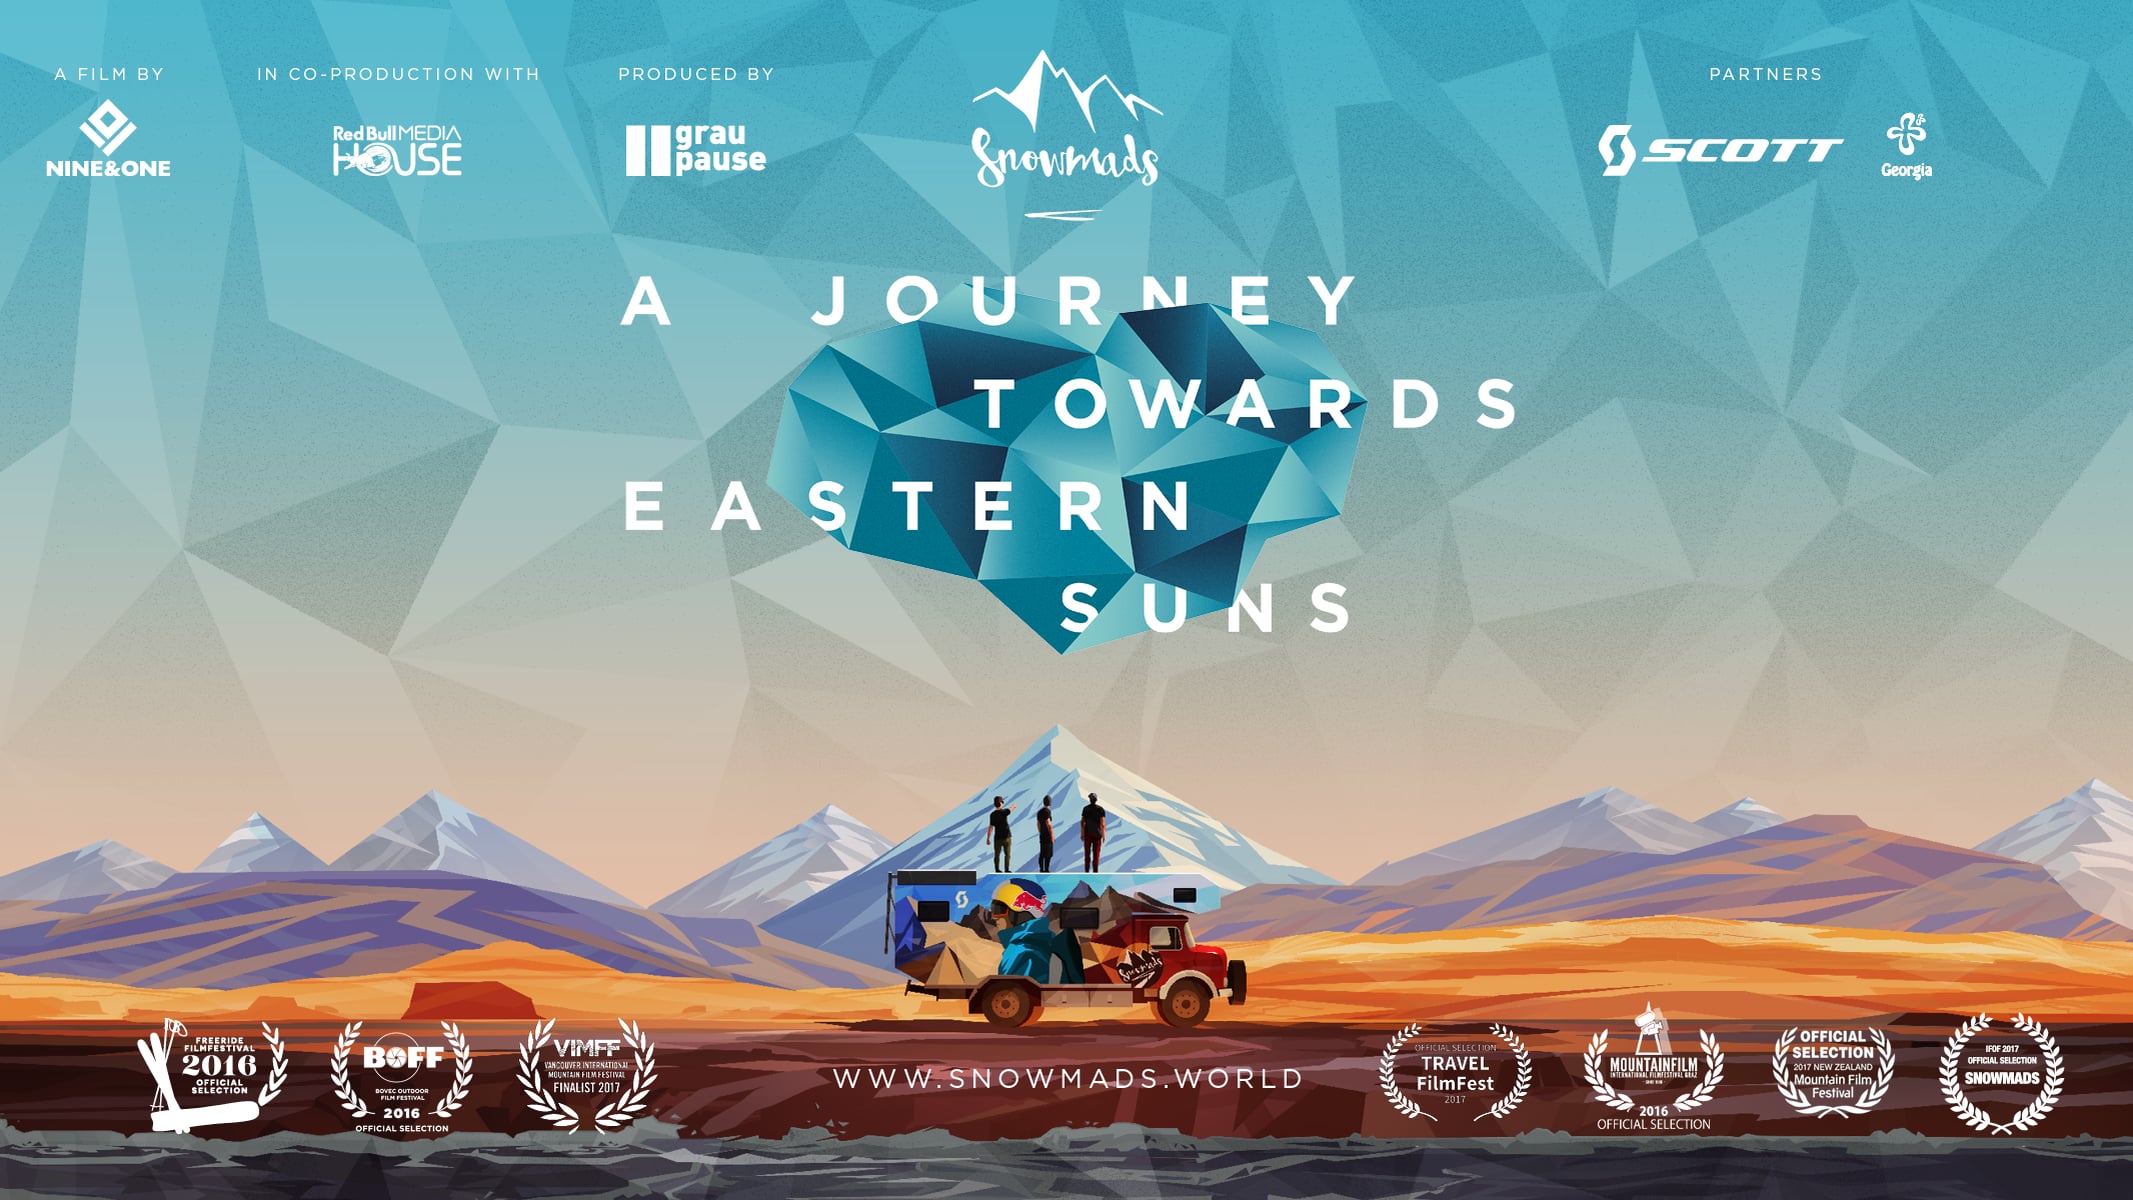 Watch Snowmads- A Journey Towards Eastern Suns 4K Online Vimeo On Demand on Vimeo